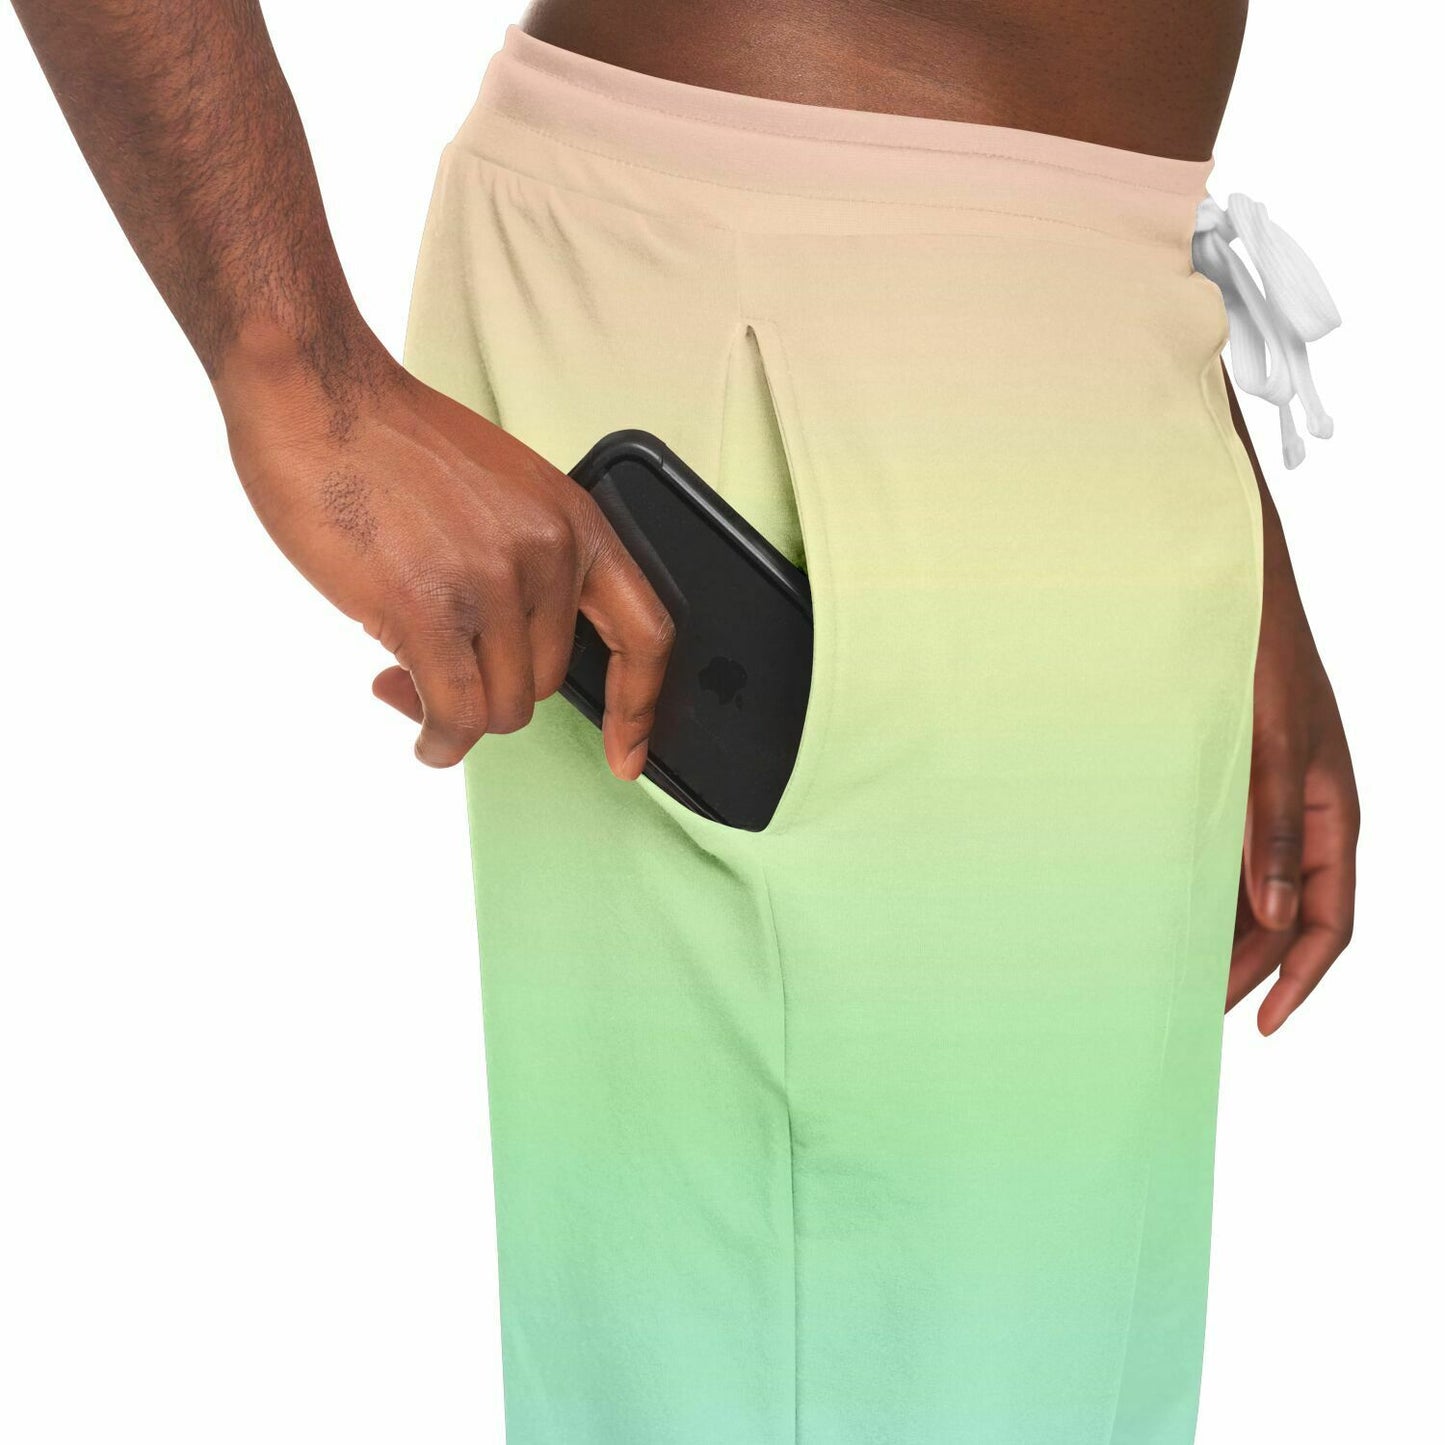 Pastel Rainbow Joggers Sweatpants with Pockets, Ombre Gradient Tie Dye Women Men Fleece  Comfy Cotton Sweats Pants Loungewear Starcove Fashion